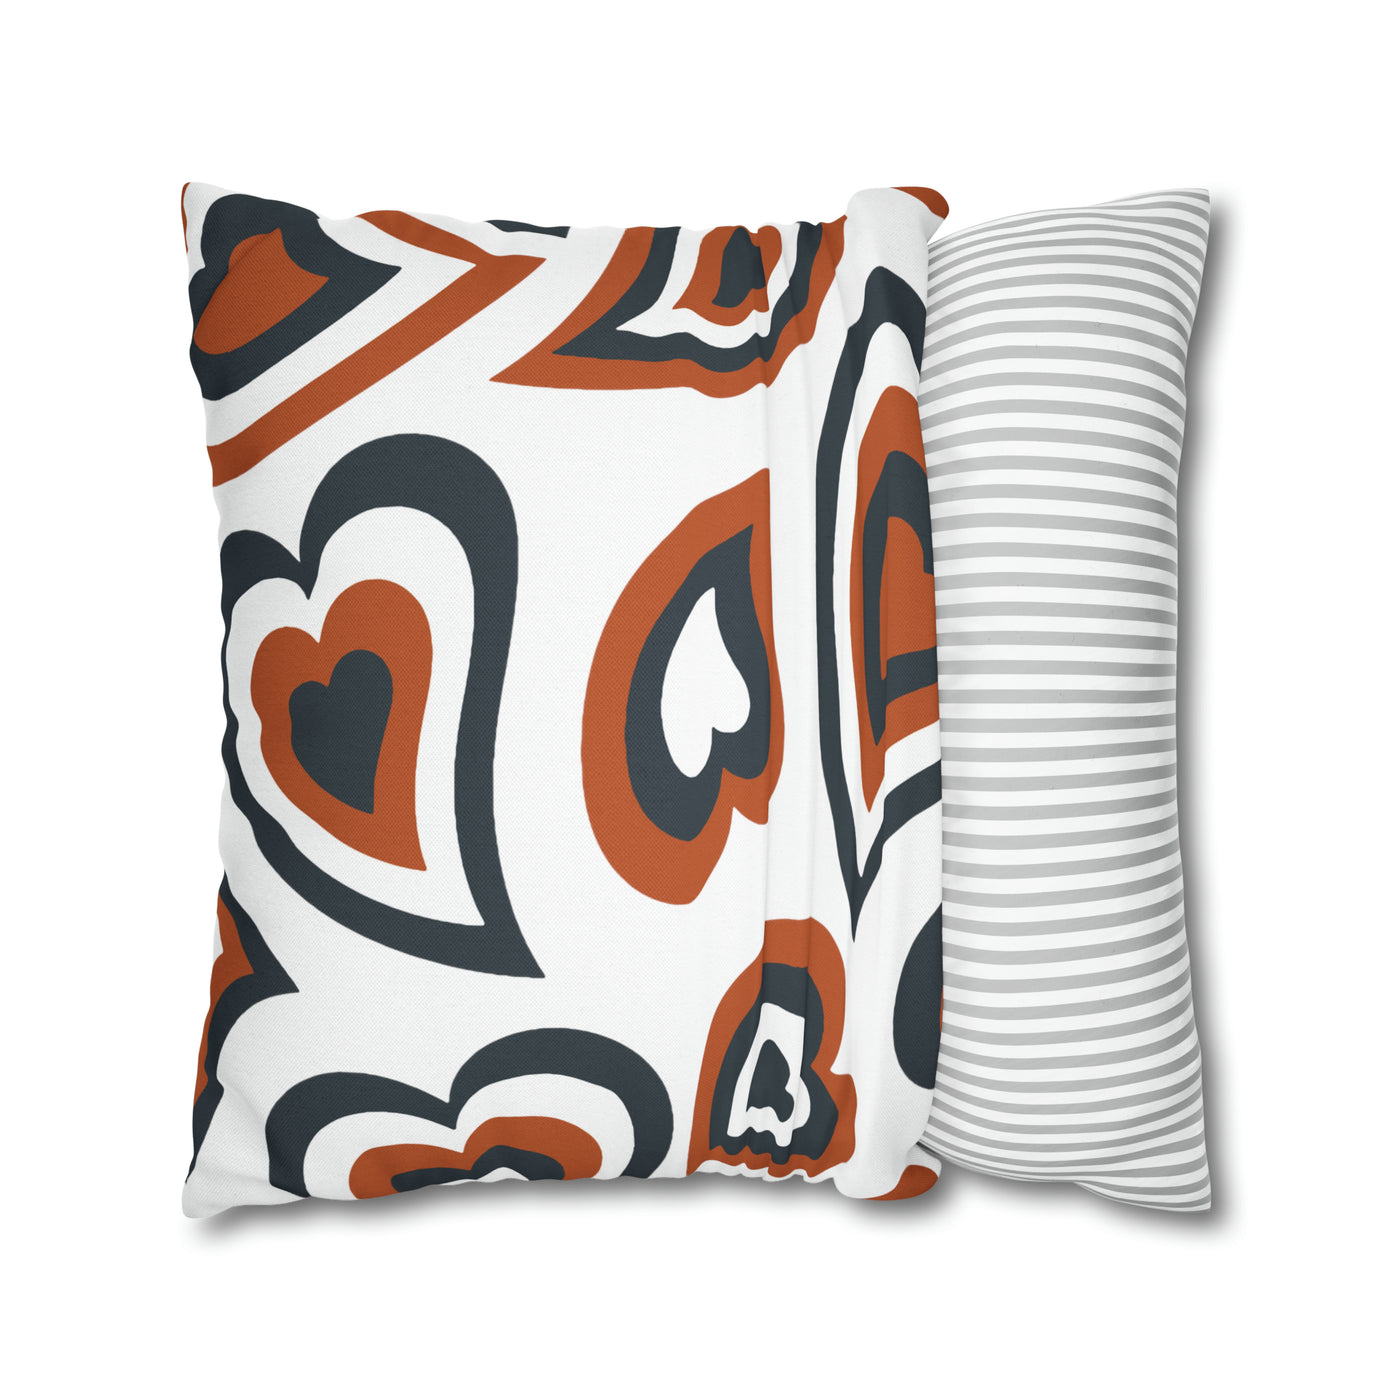 Retro Heart Pillow - Burnt Orange & White, Heart Pillow, Hearts, Valentine's Day, Texas Longhorns, Bed Party Pillow, Dorm Pillow